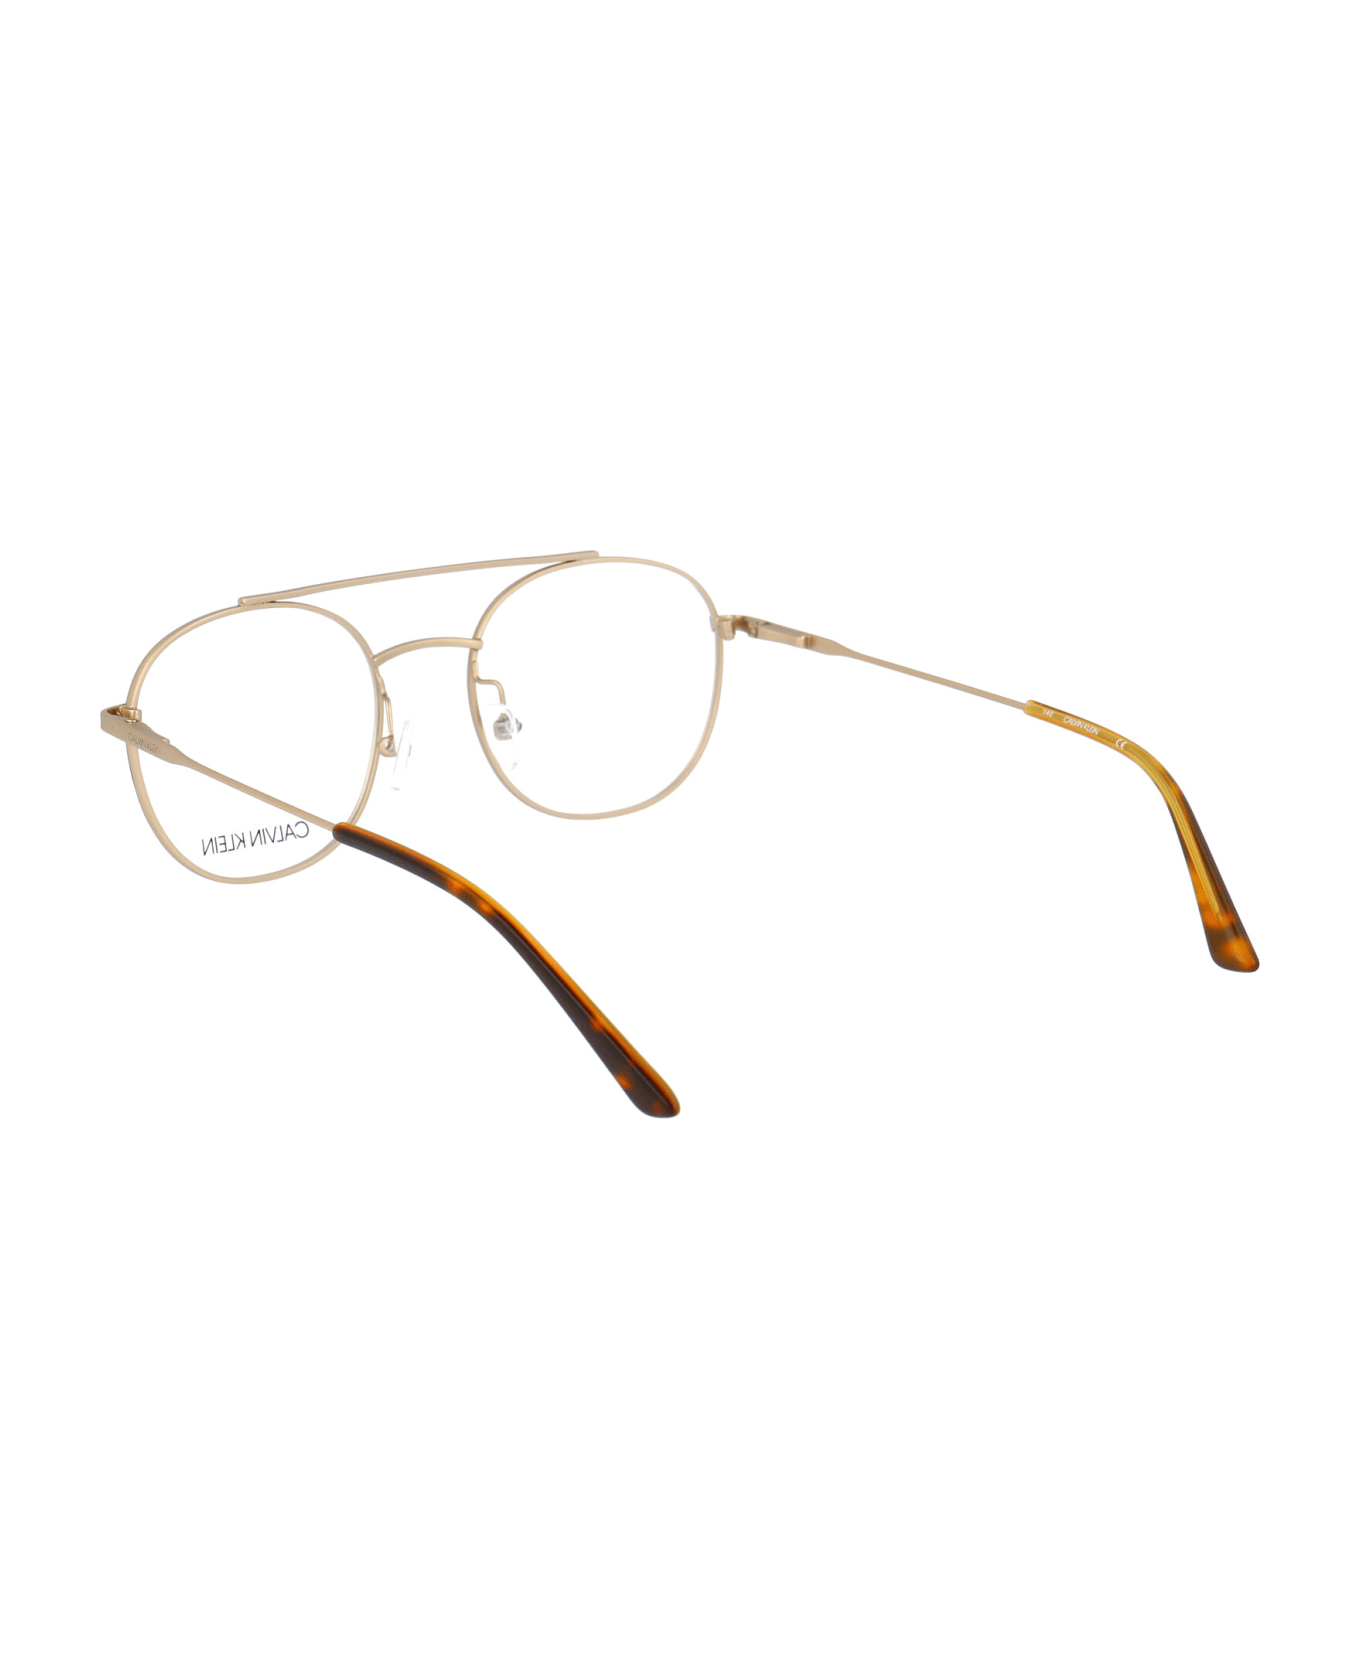 Calvin Klein Ck18123 Glasses - 200 GOLD